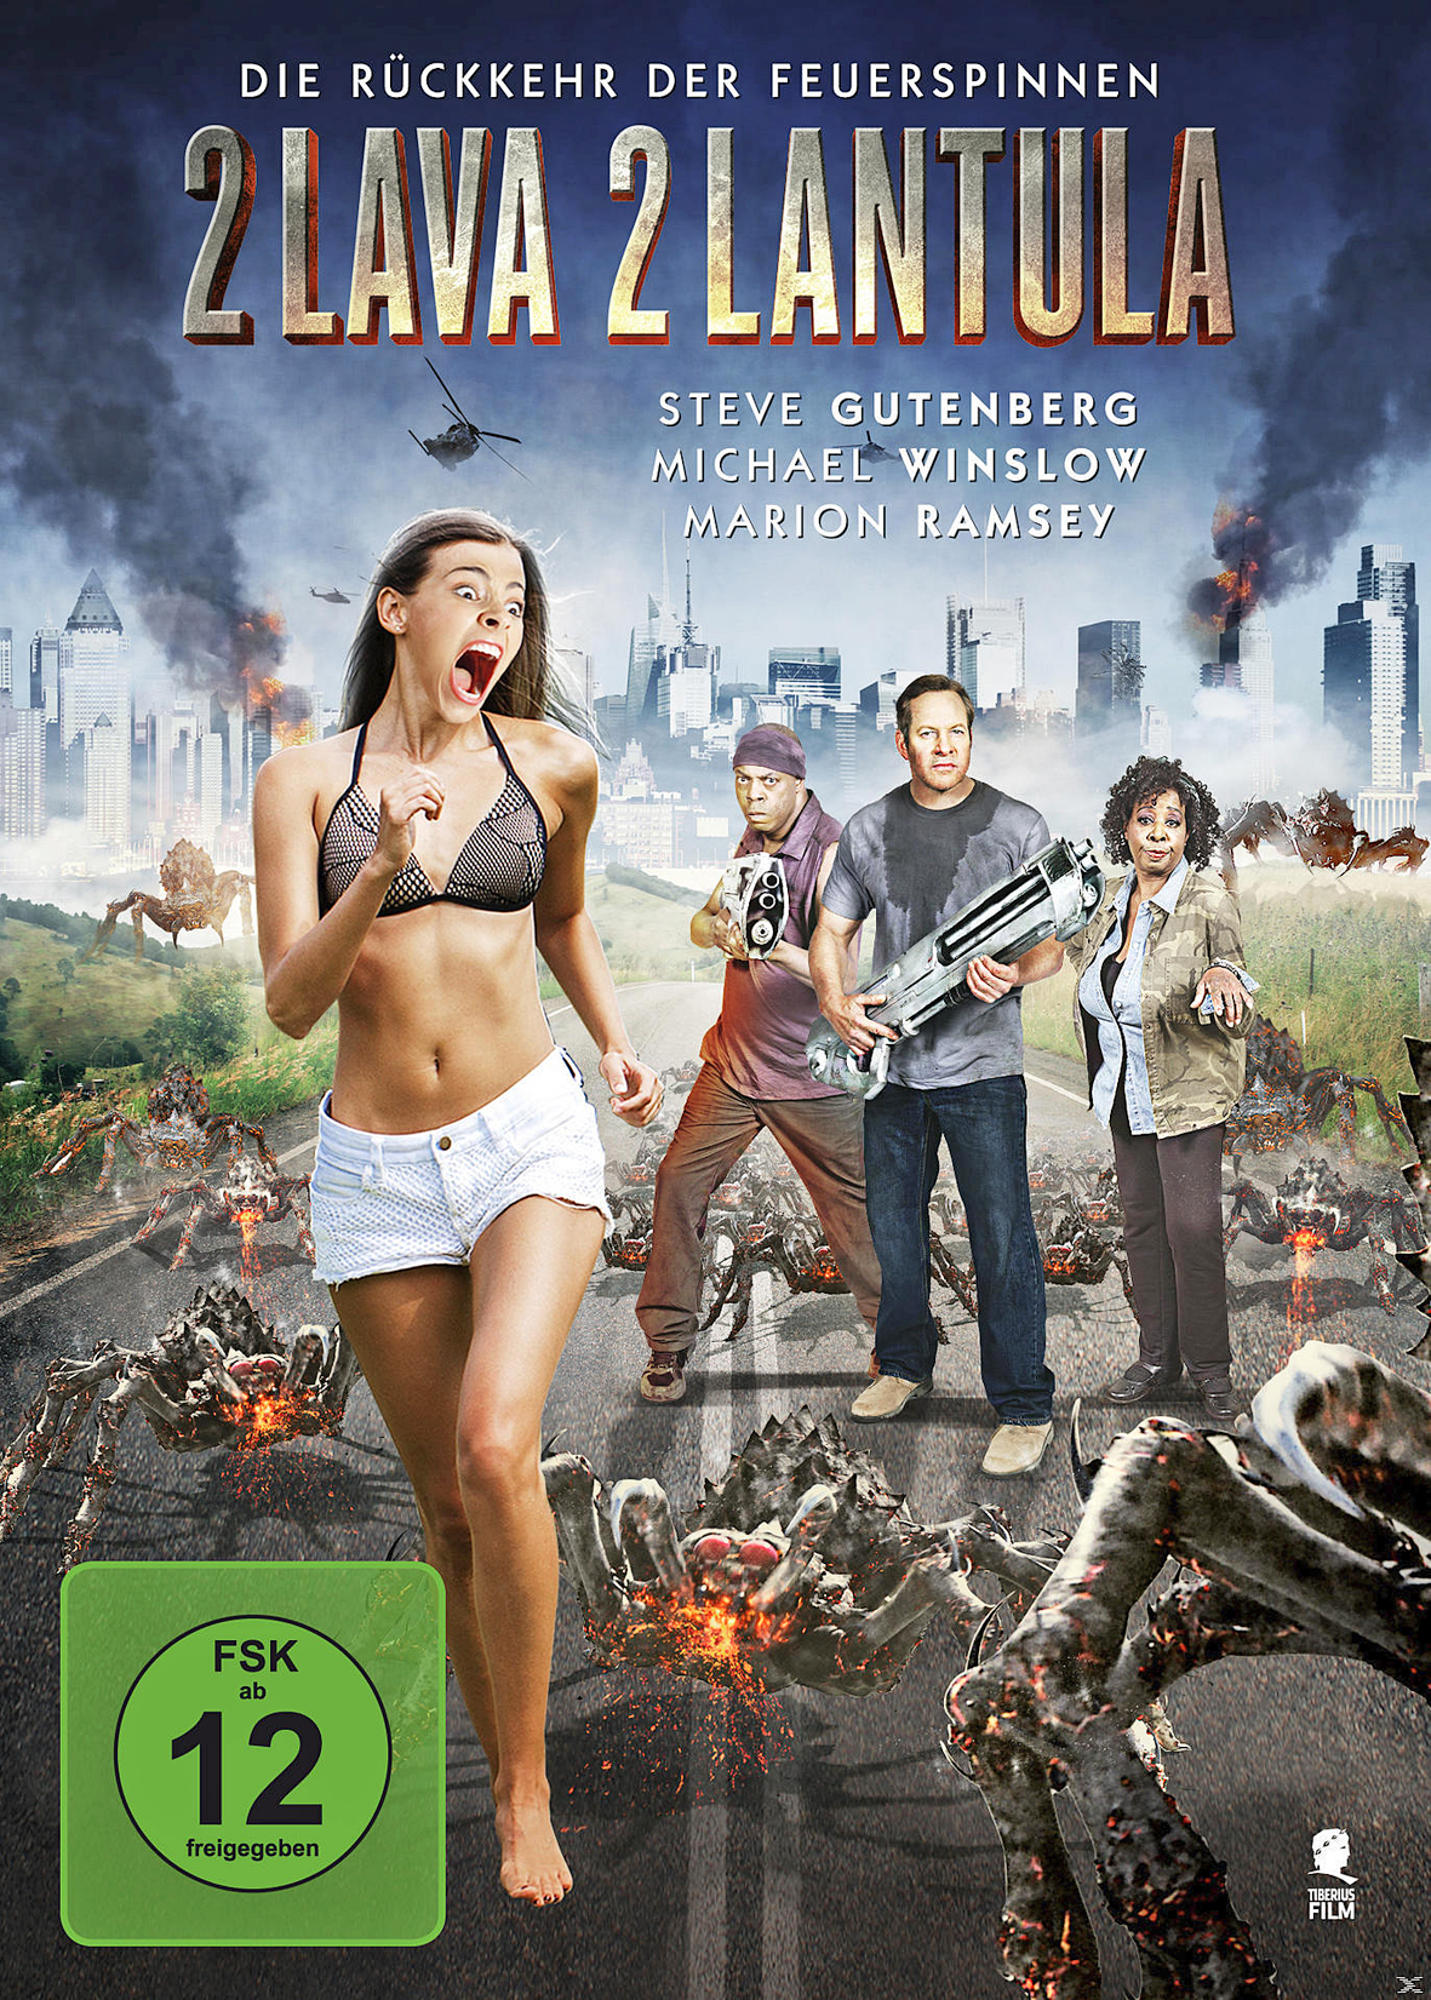 2 Lava 2 DVD Lantula